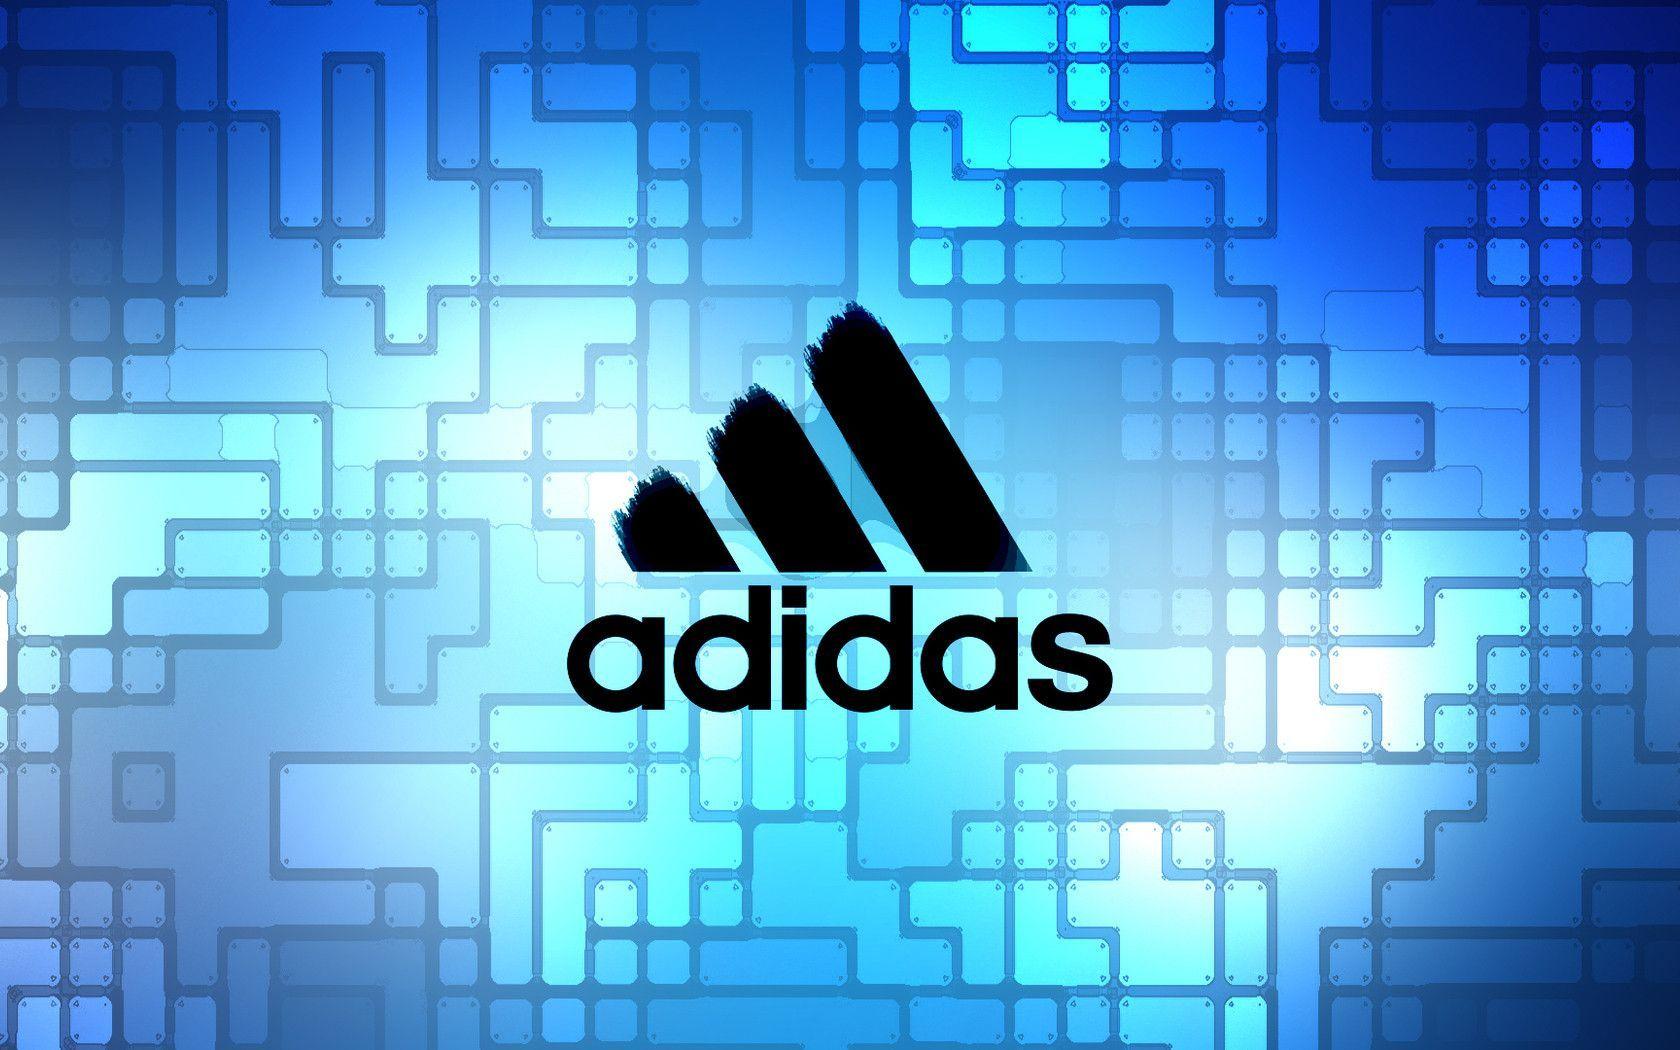 adidas logo Image HD Wallpaper